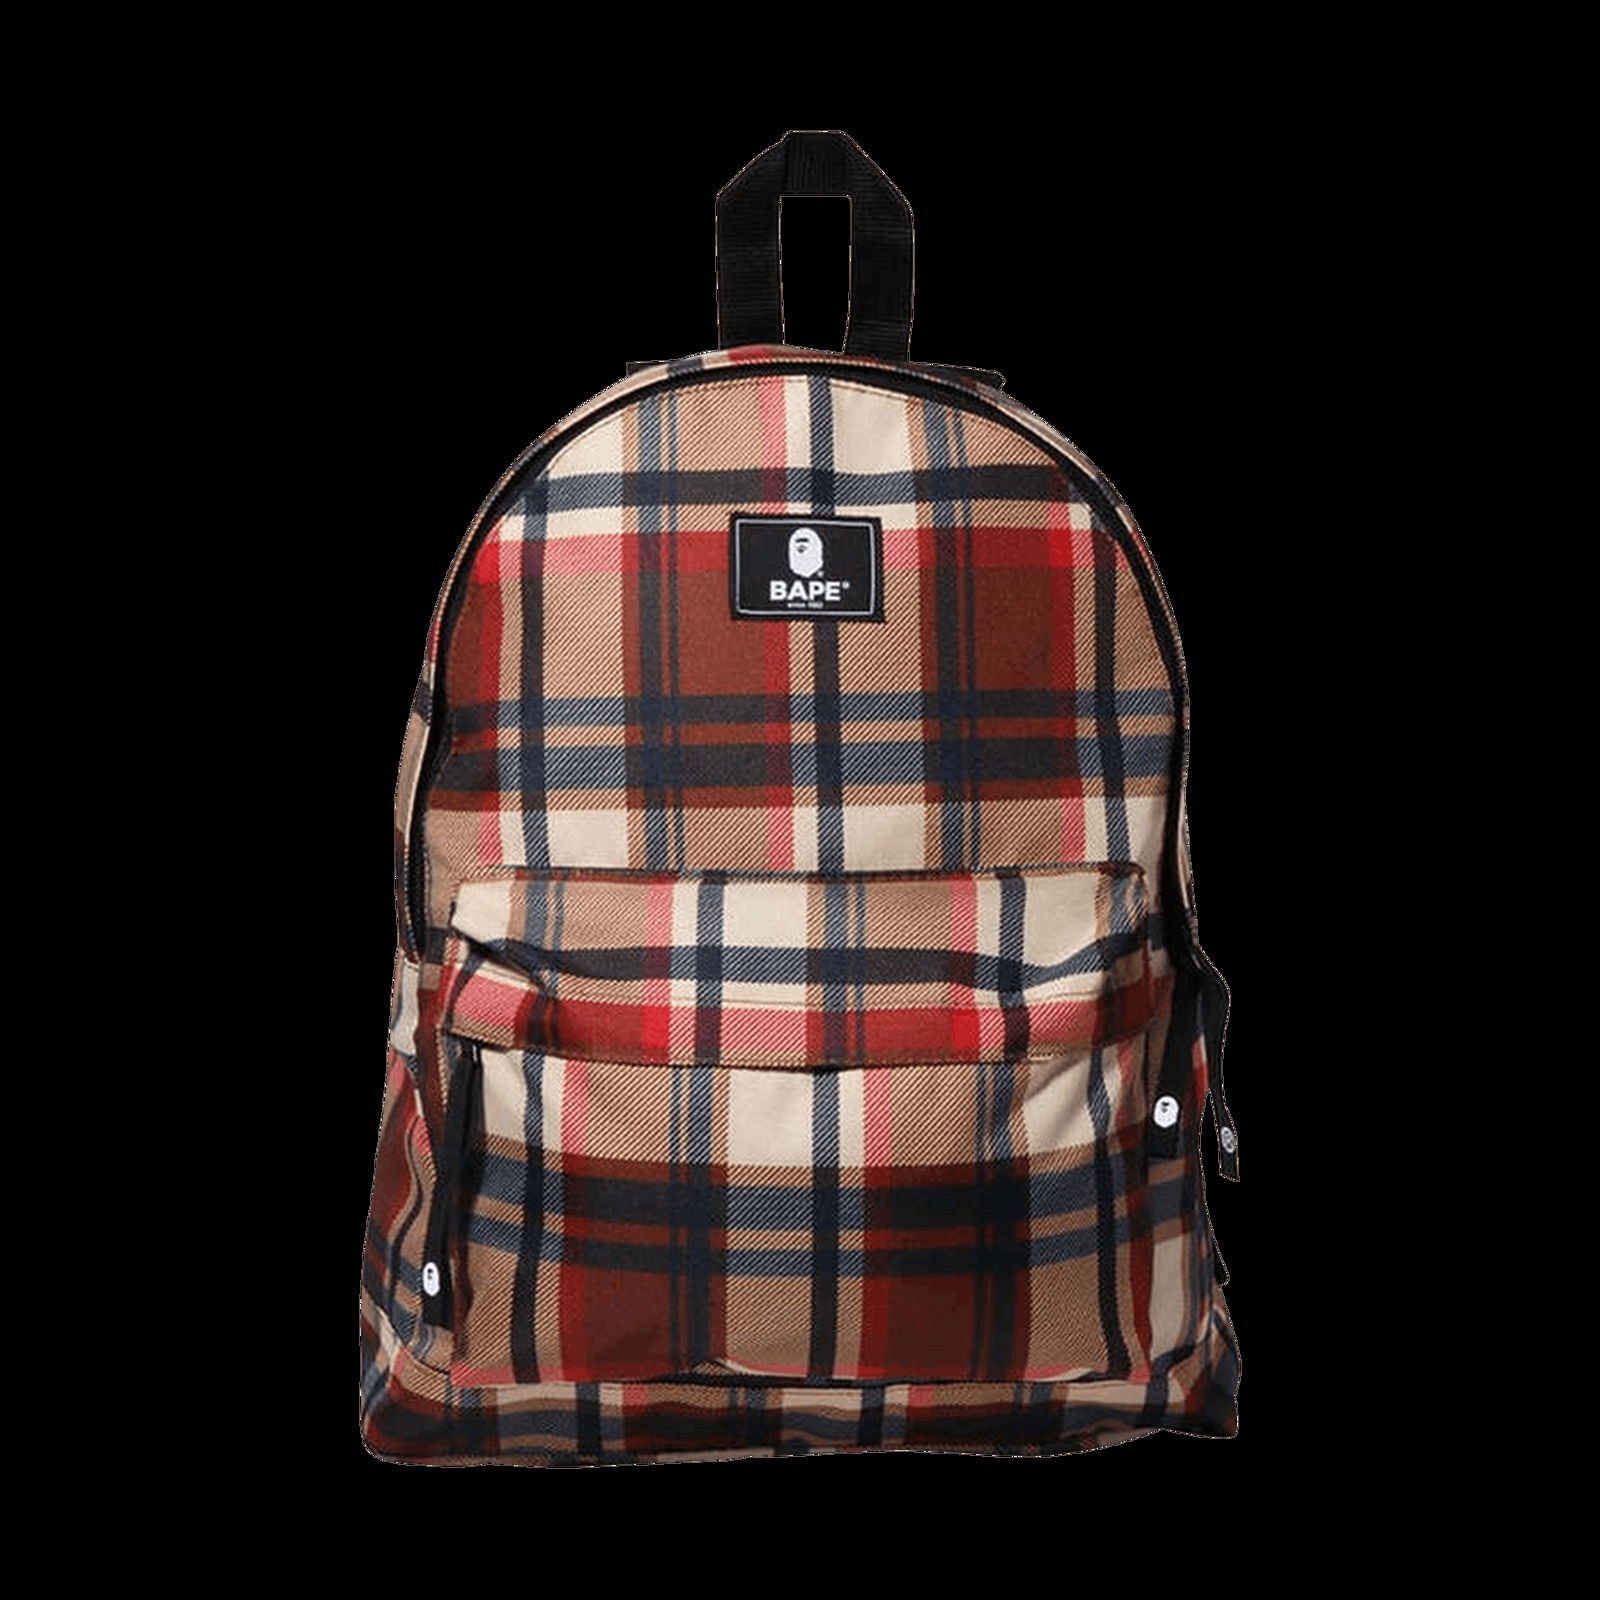 Backpack BAPE Check Daypack 4I20 189 001 RED | FlexDog